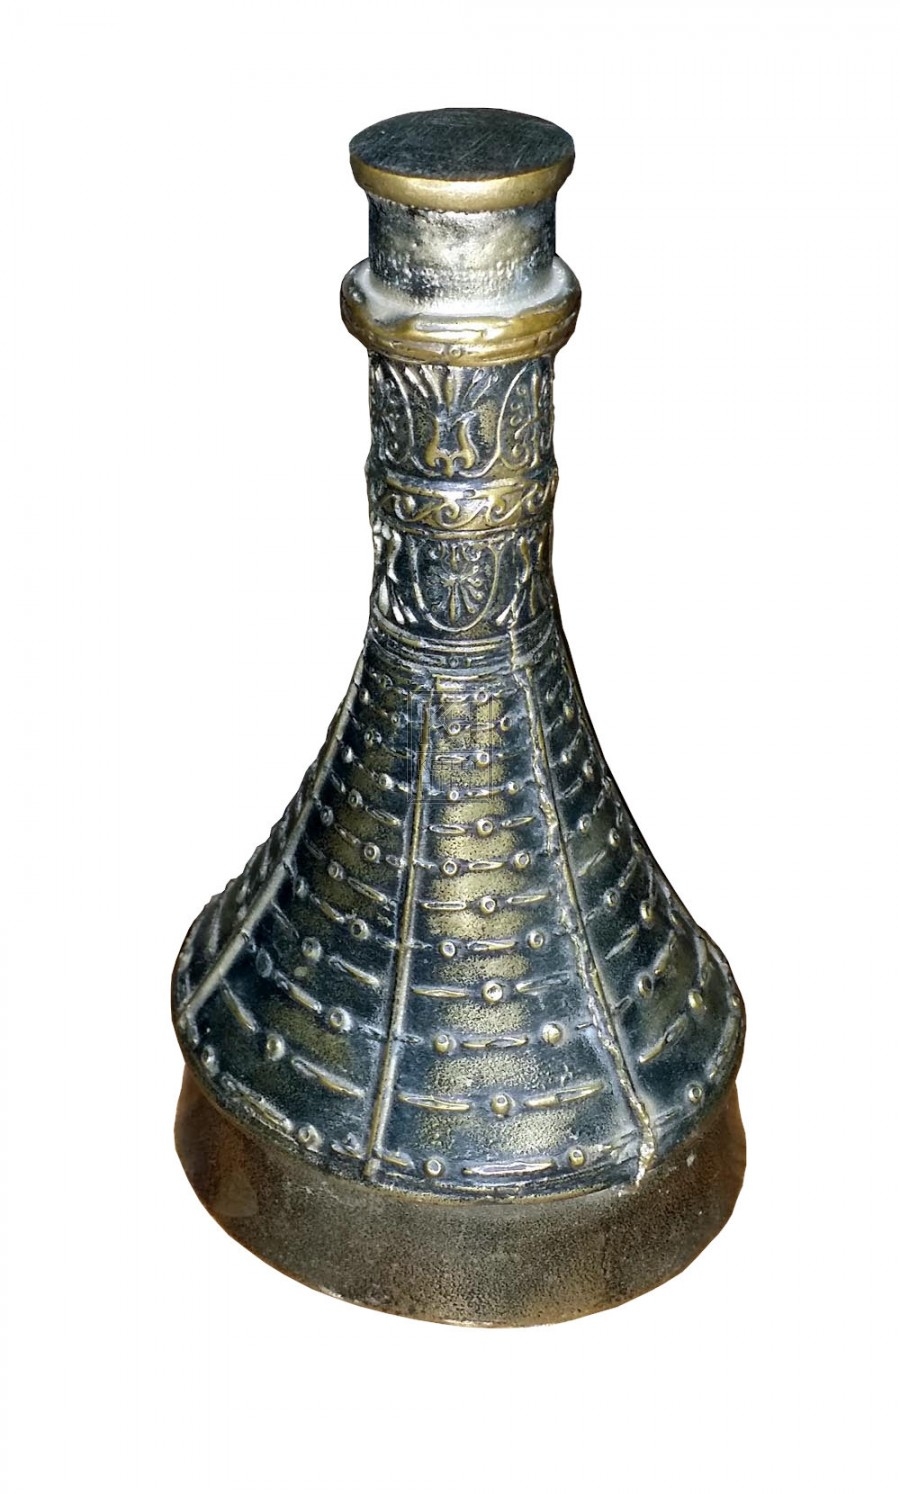 Small brass potion bottle